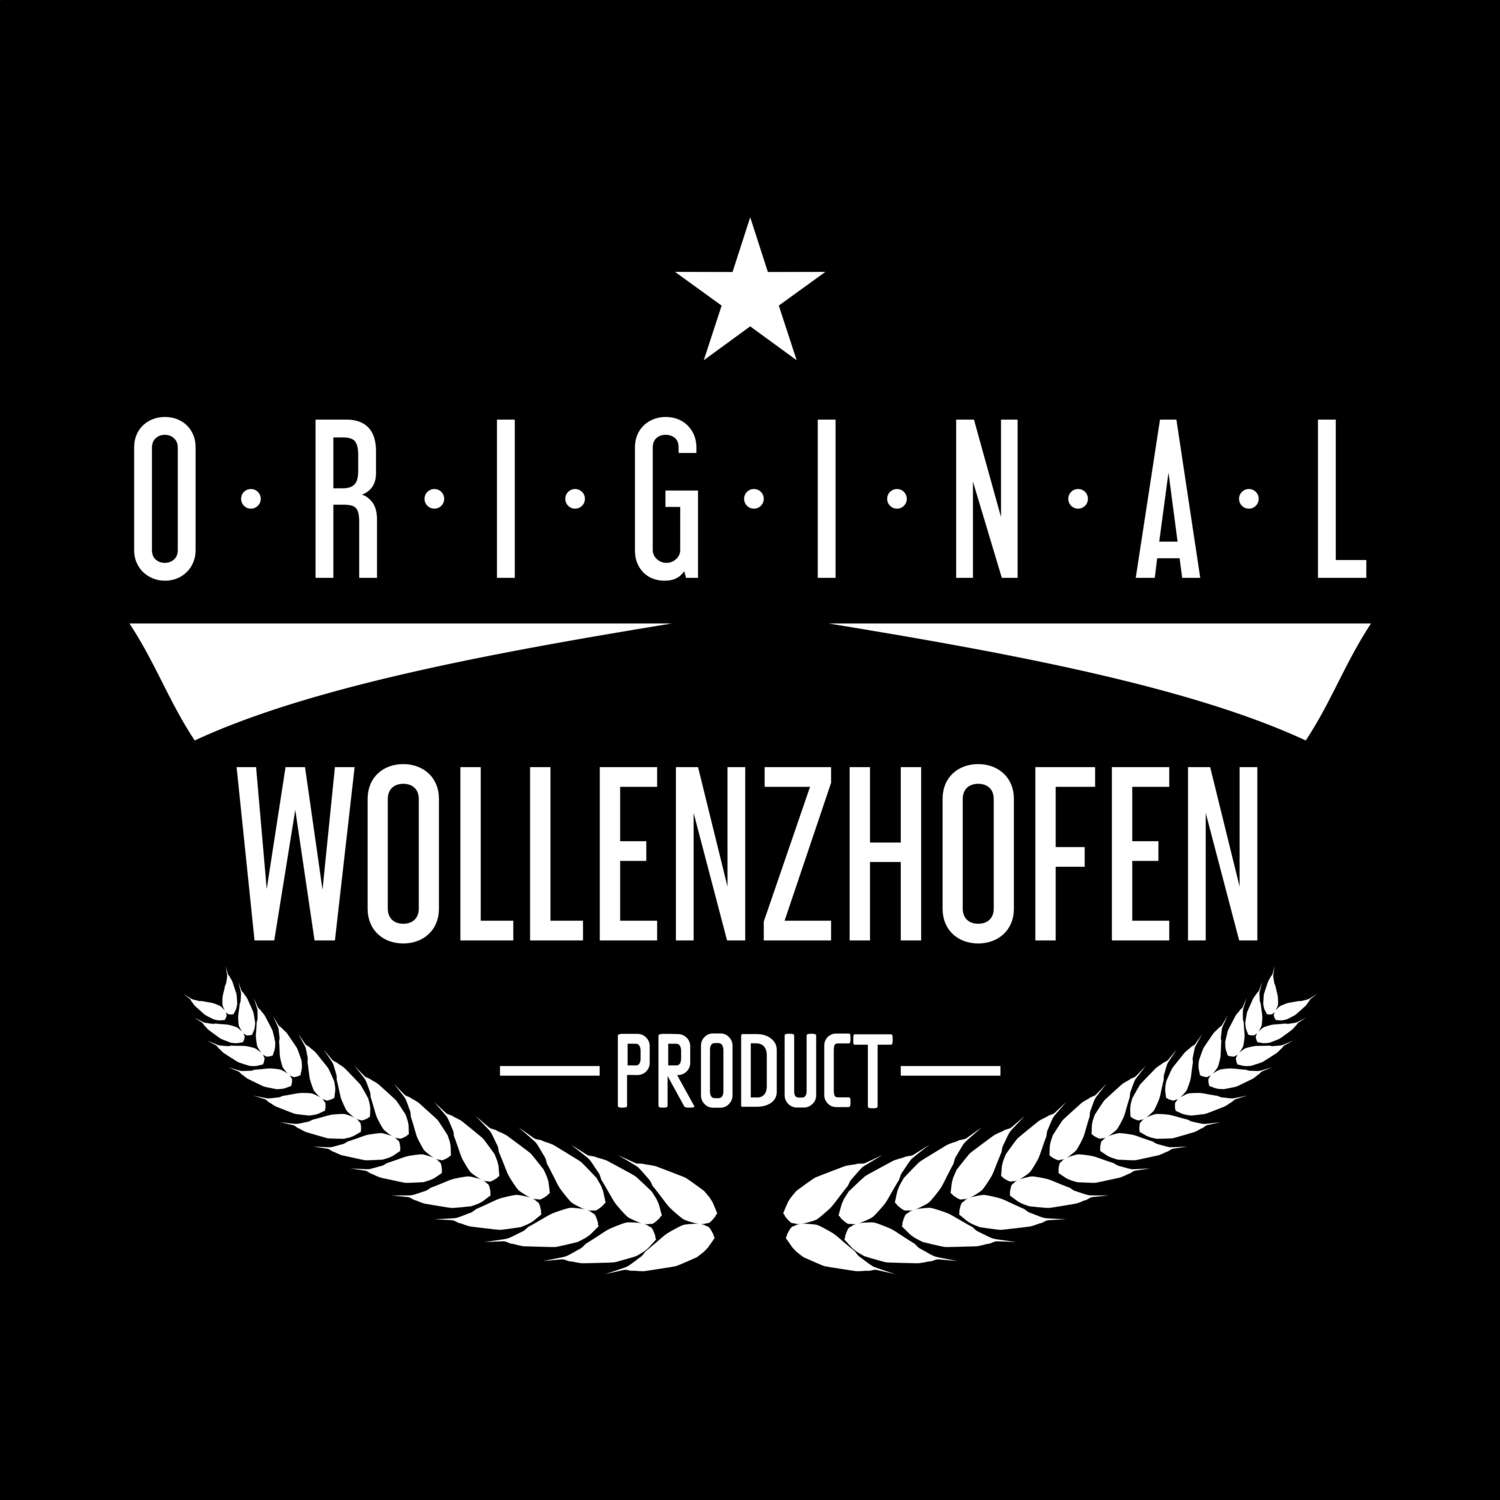 Wollenzhofen T-Shirt »Original Product«